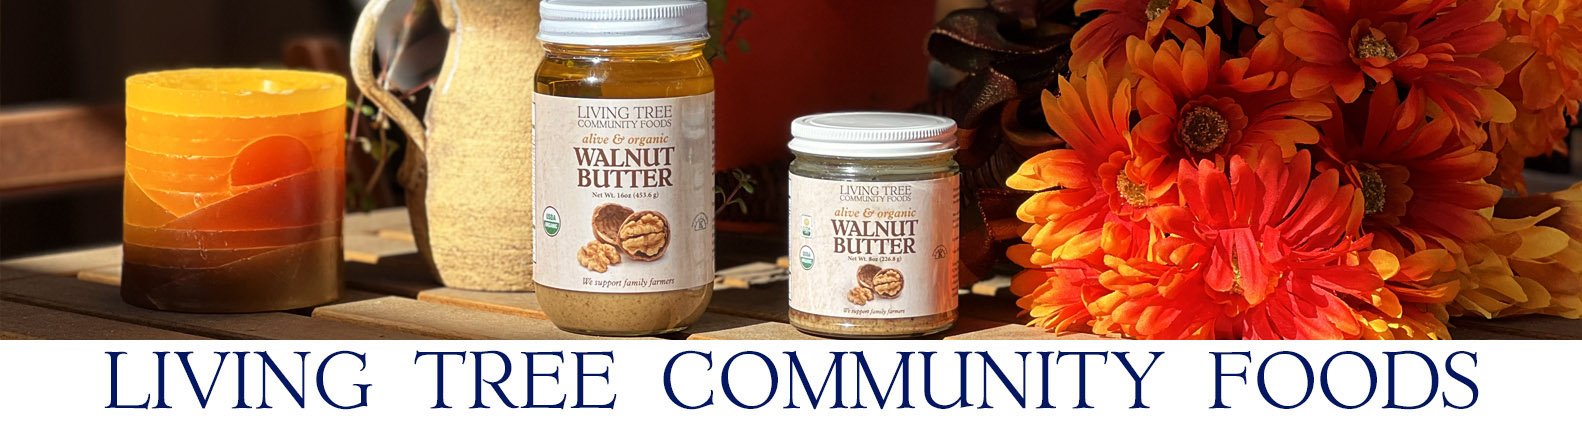 Walnut Butter 16oz & 8oz Newsletter Header